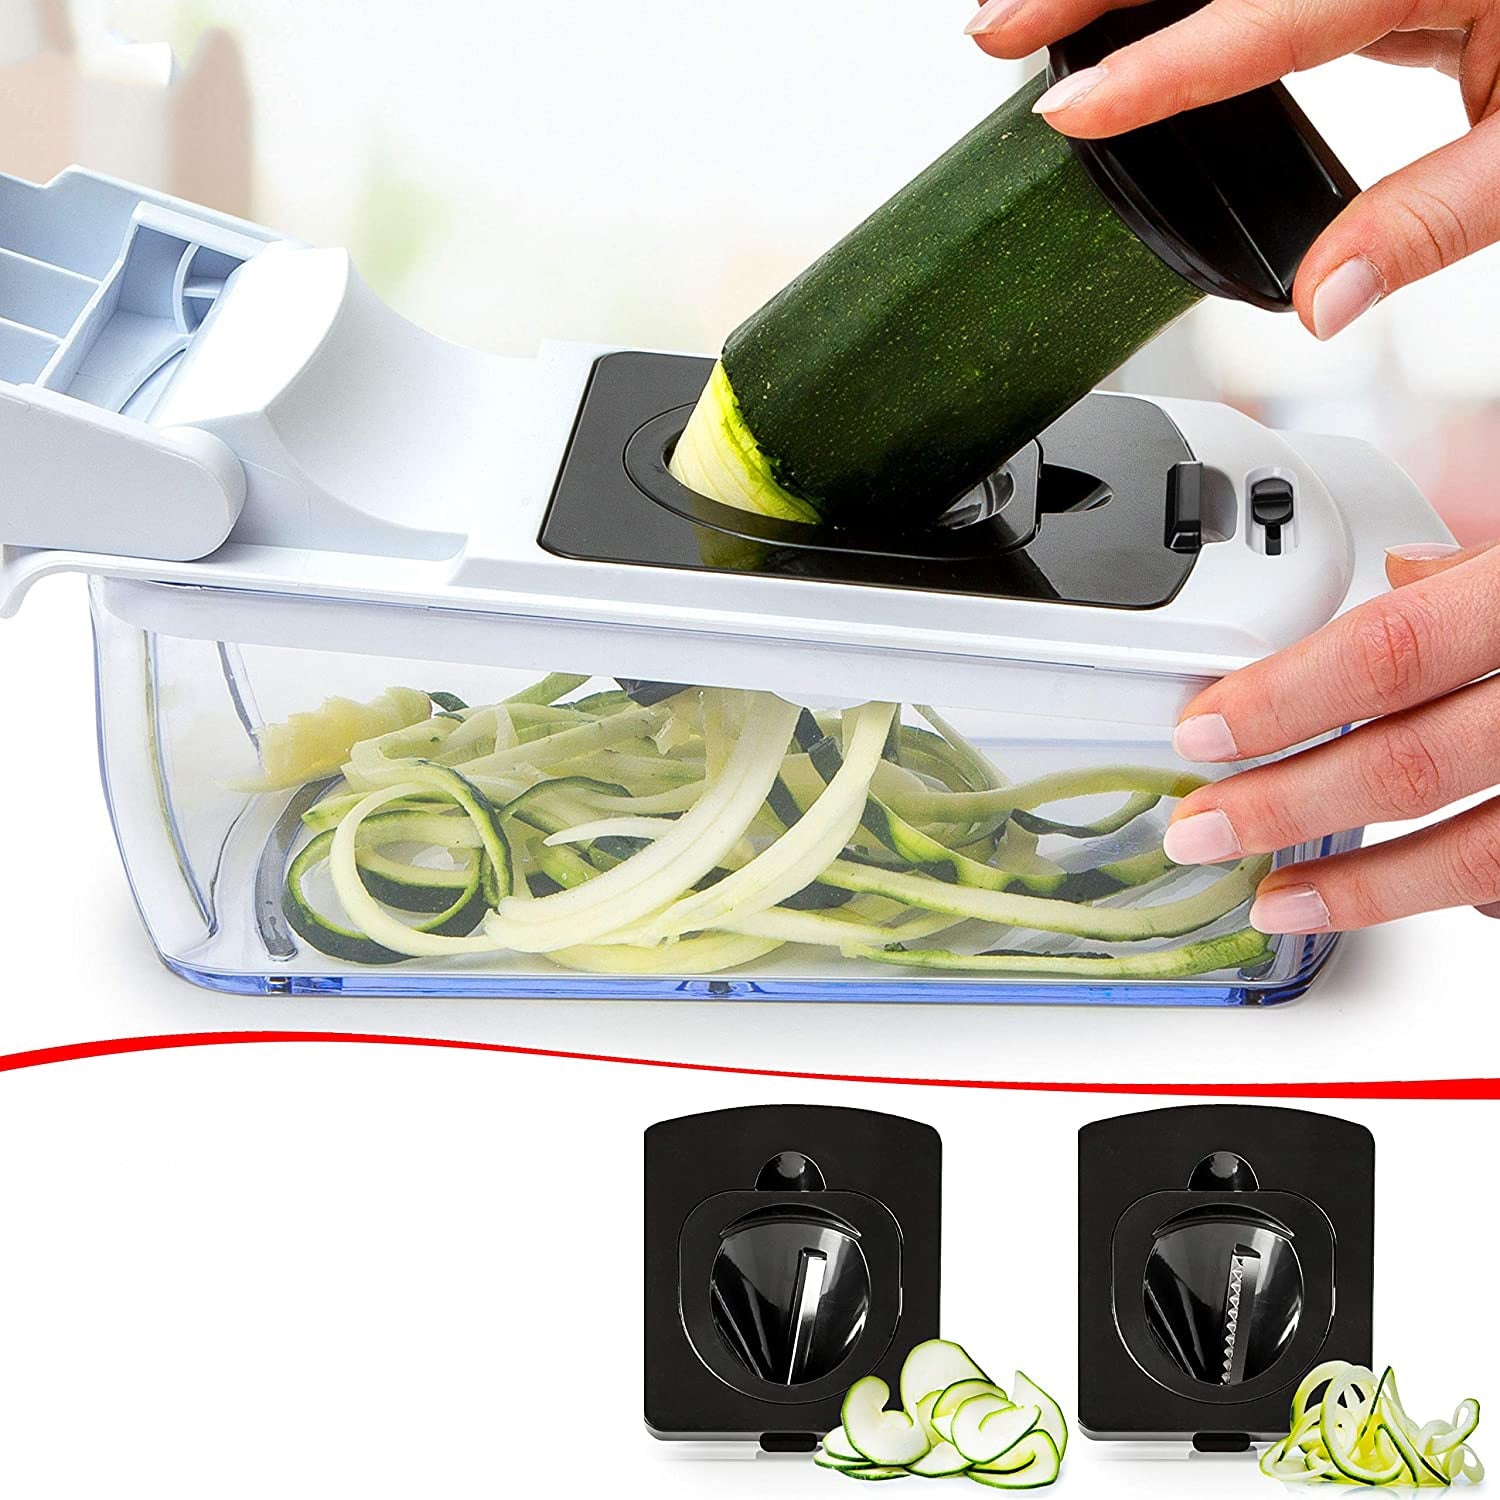 OMAS Expert 205: Our Ultimate Vegetable Cutter Solution 120V